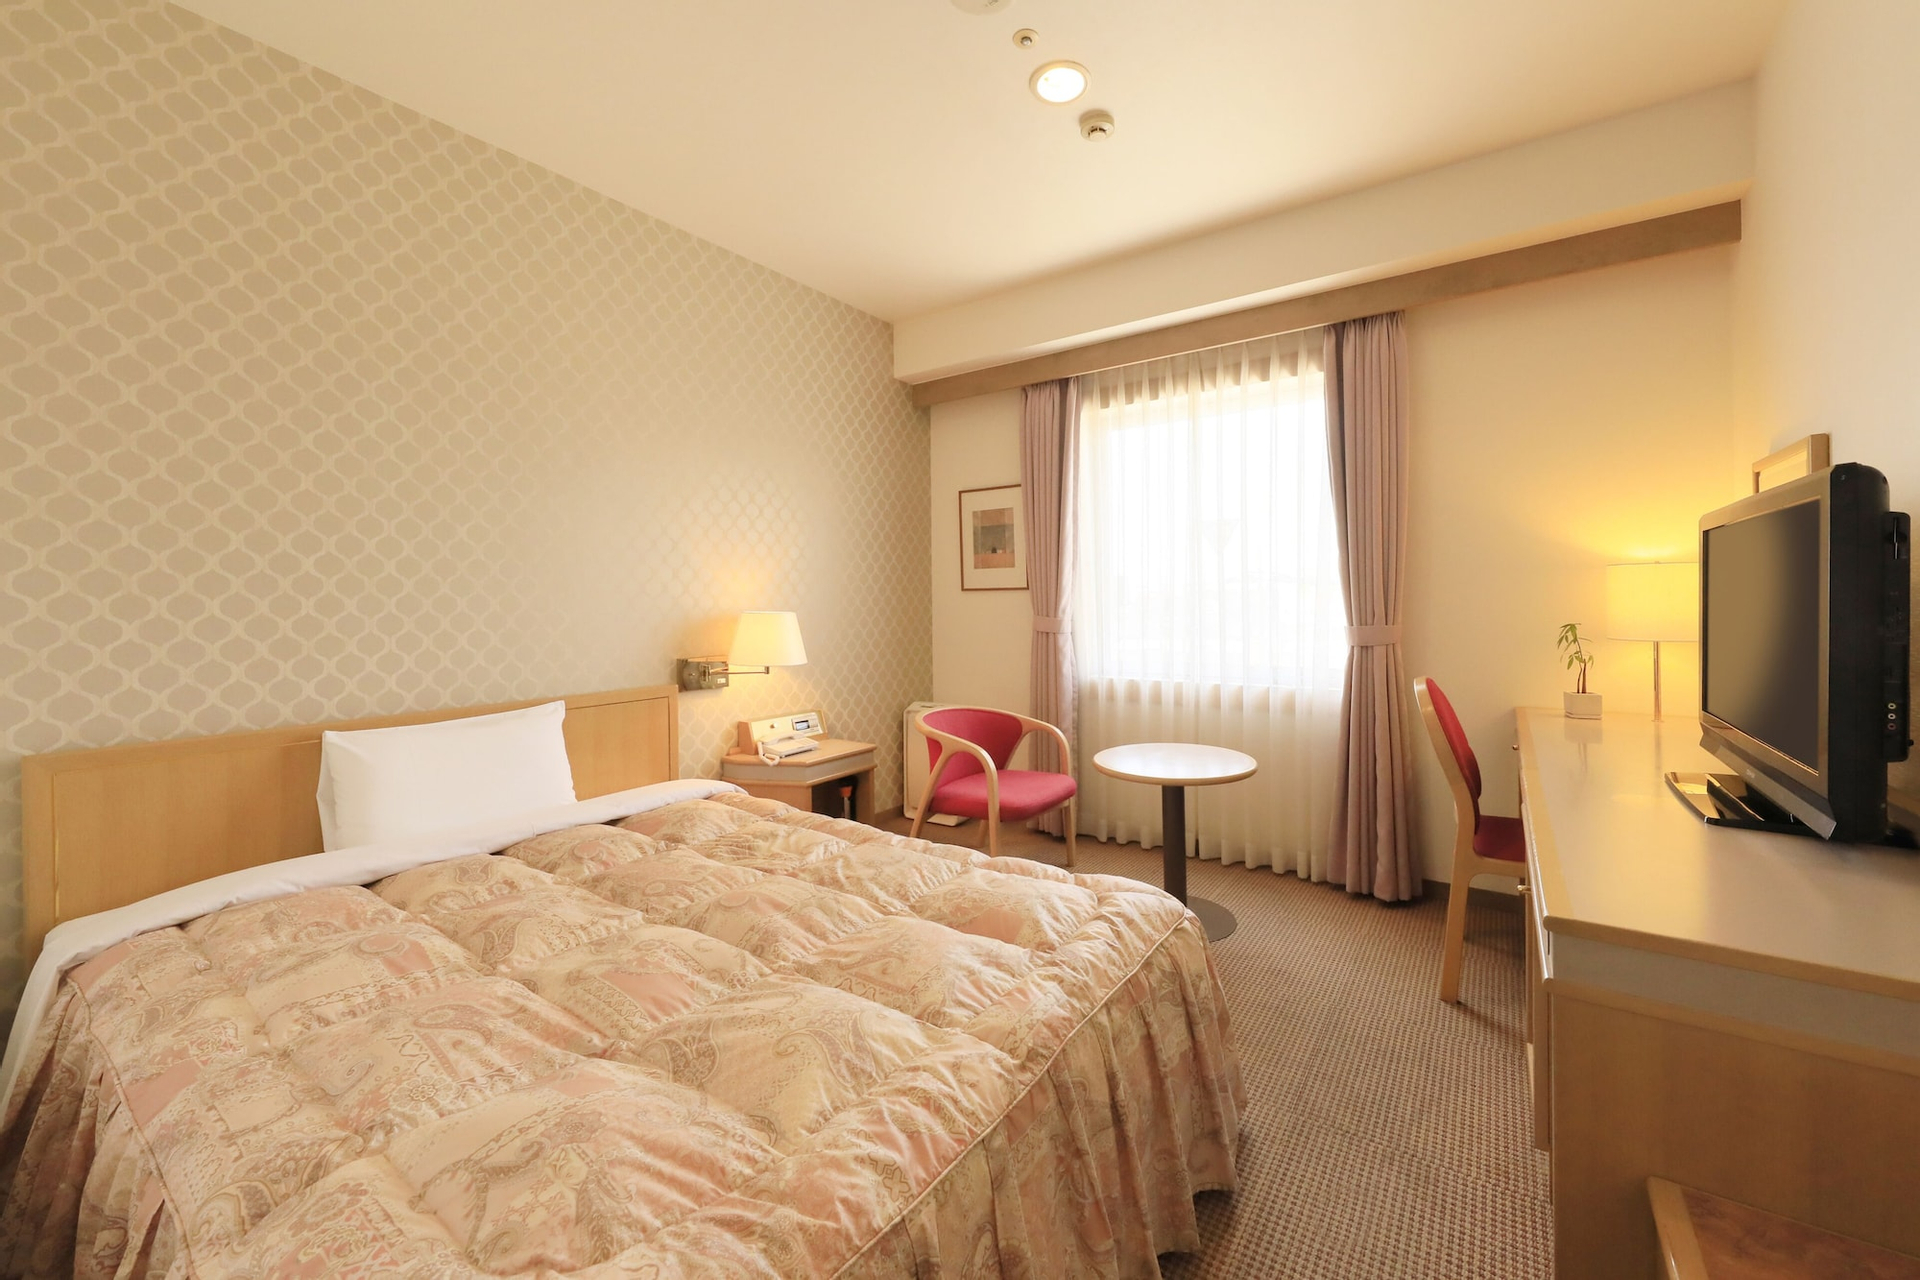 Bedroom 5, Tokorozawa Park Hotel, Tokorozawa